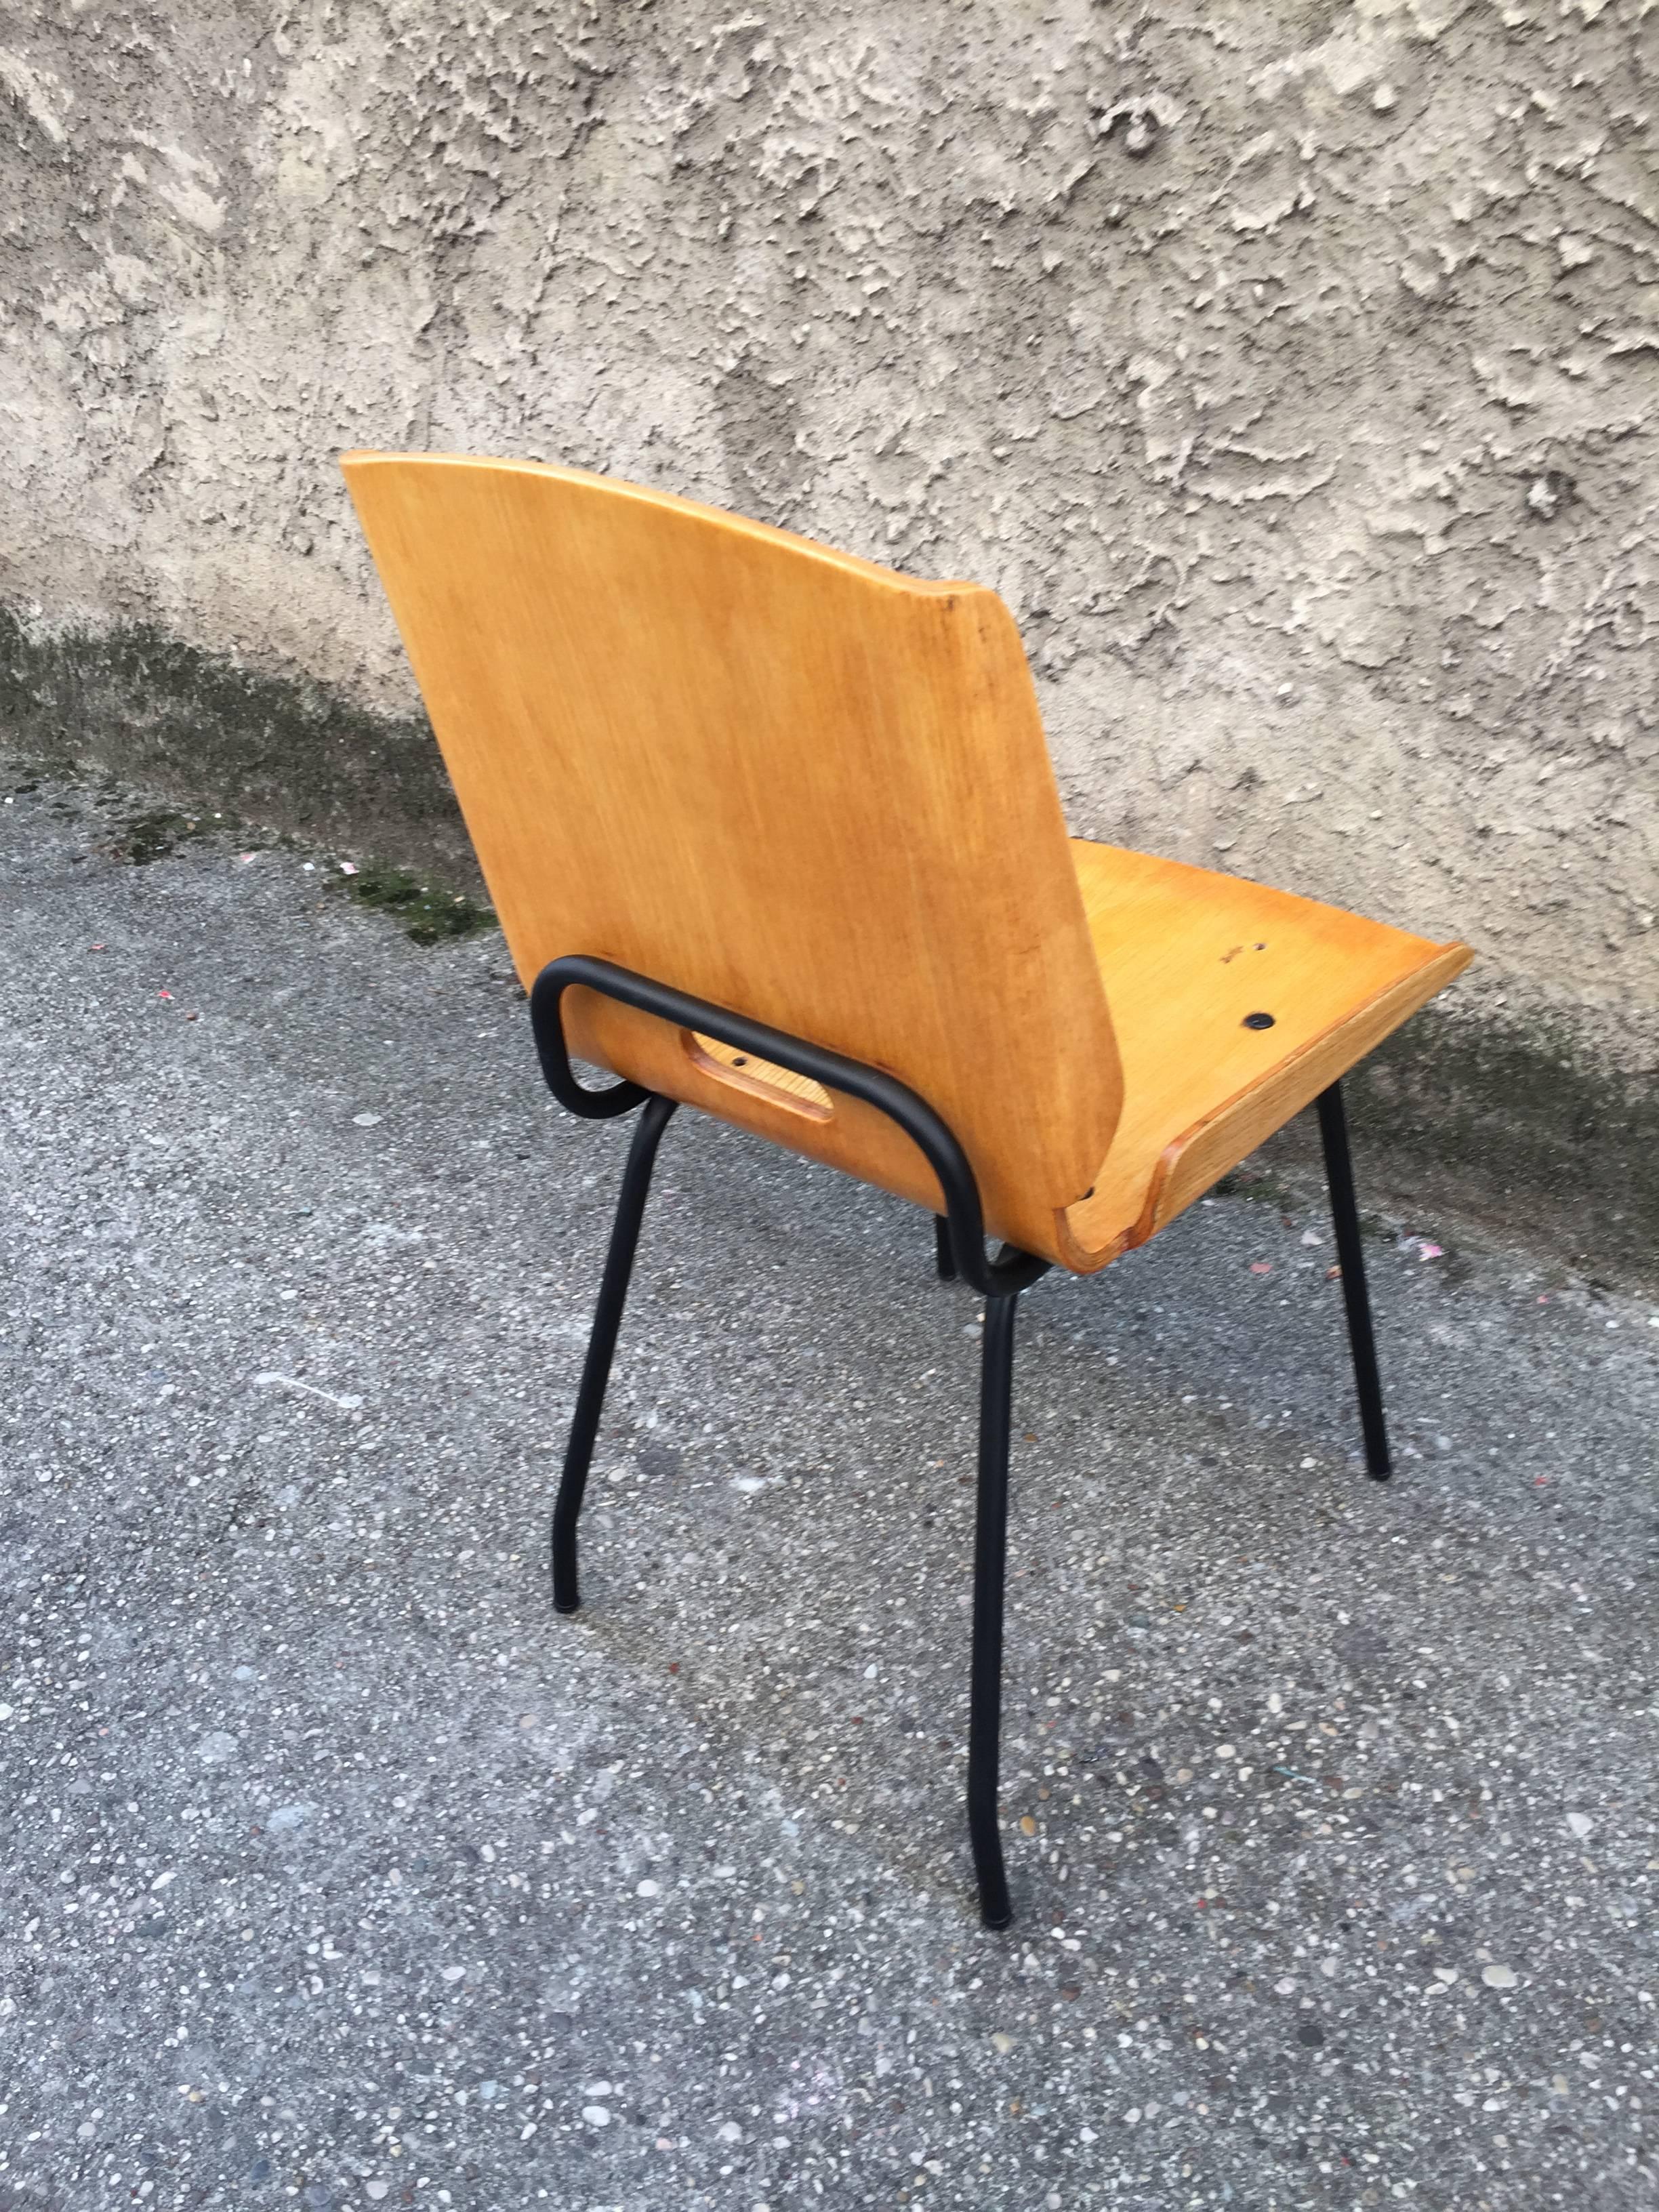 Ten rare chairs, design G.De Carlo Arflex, 1950
Chair 